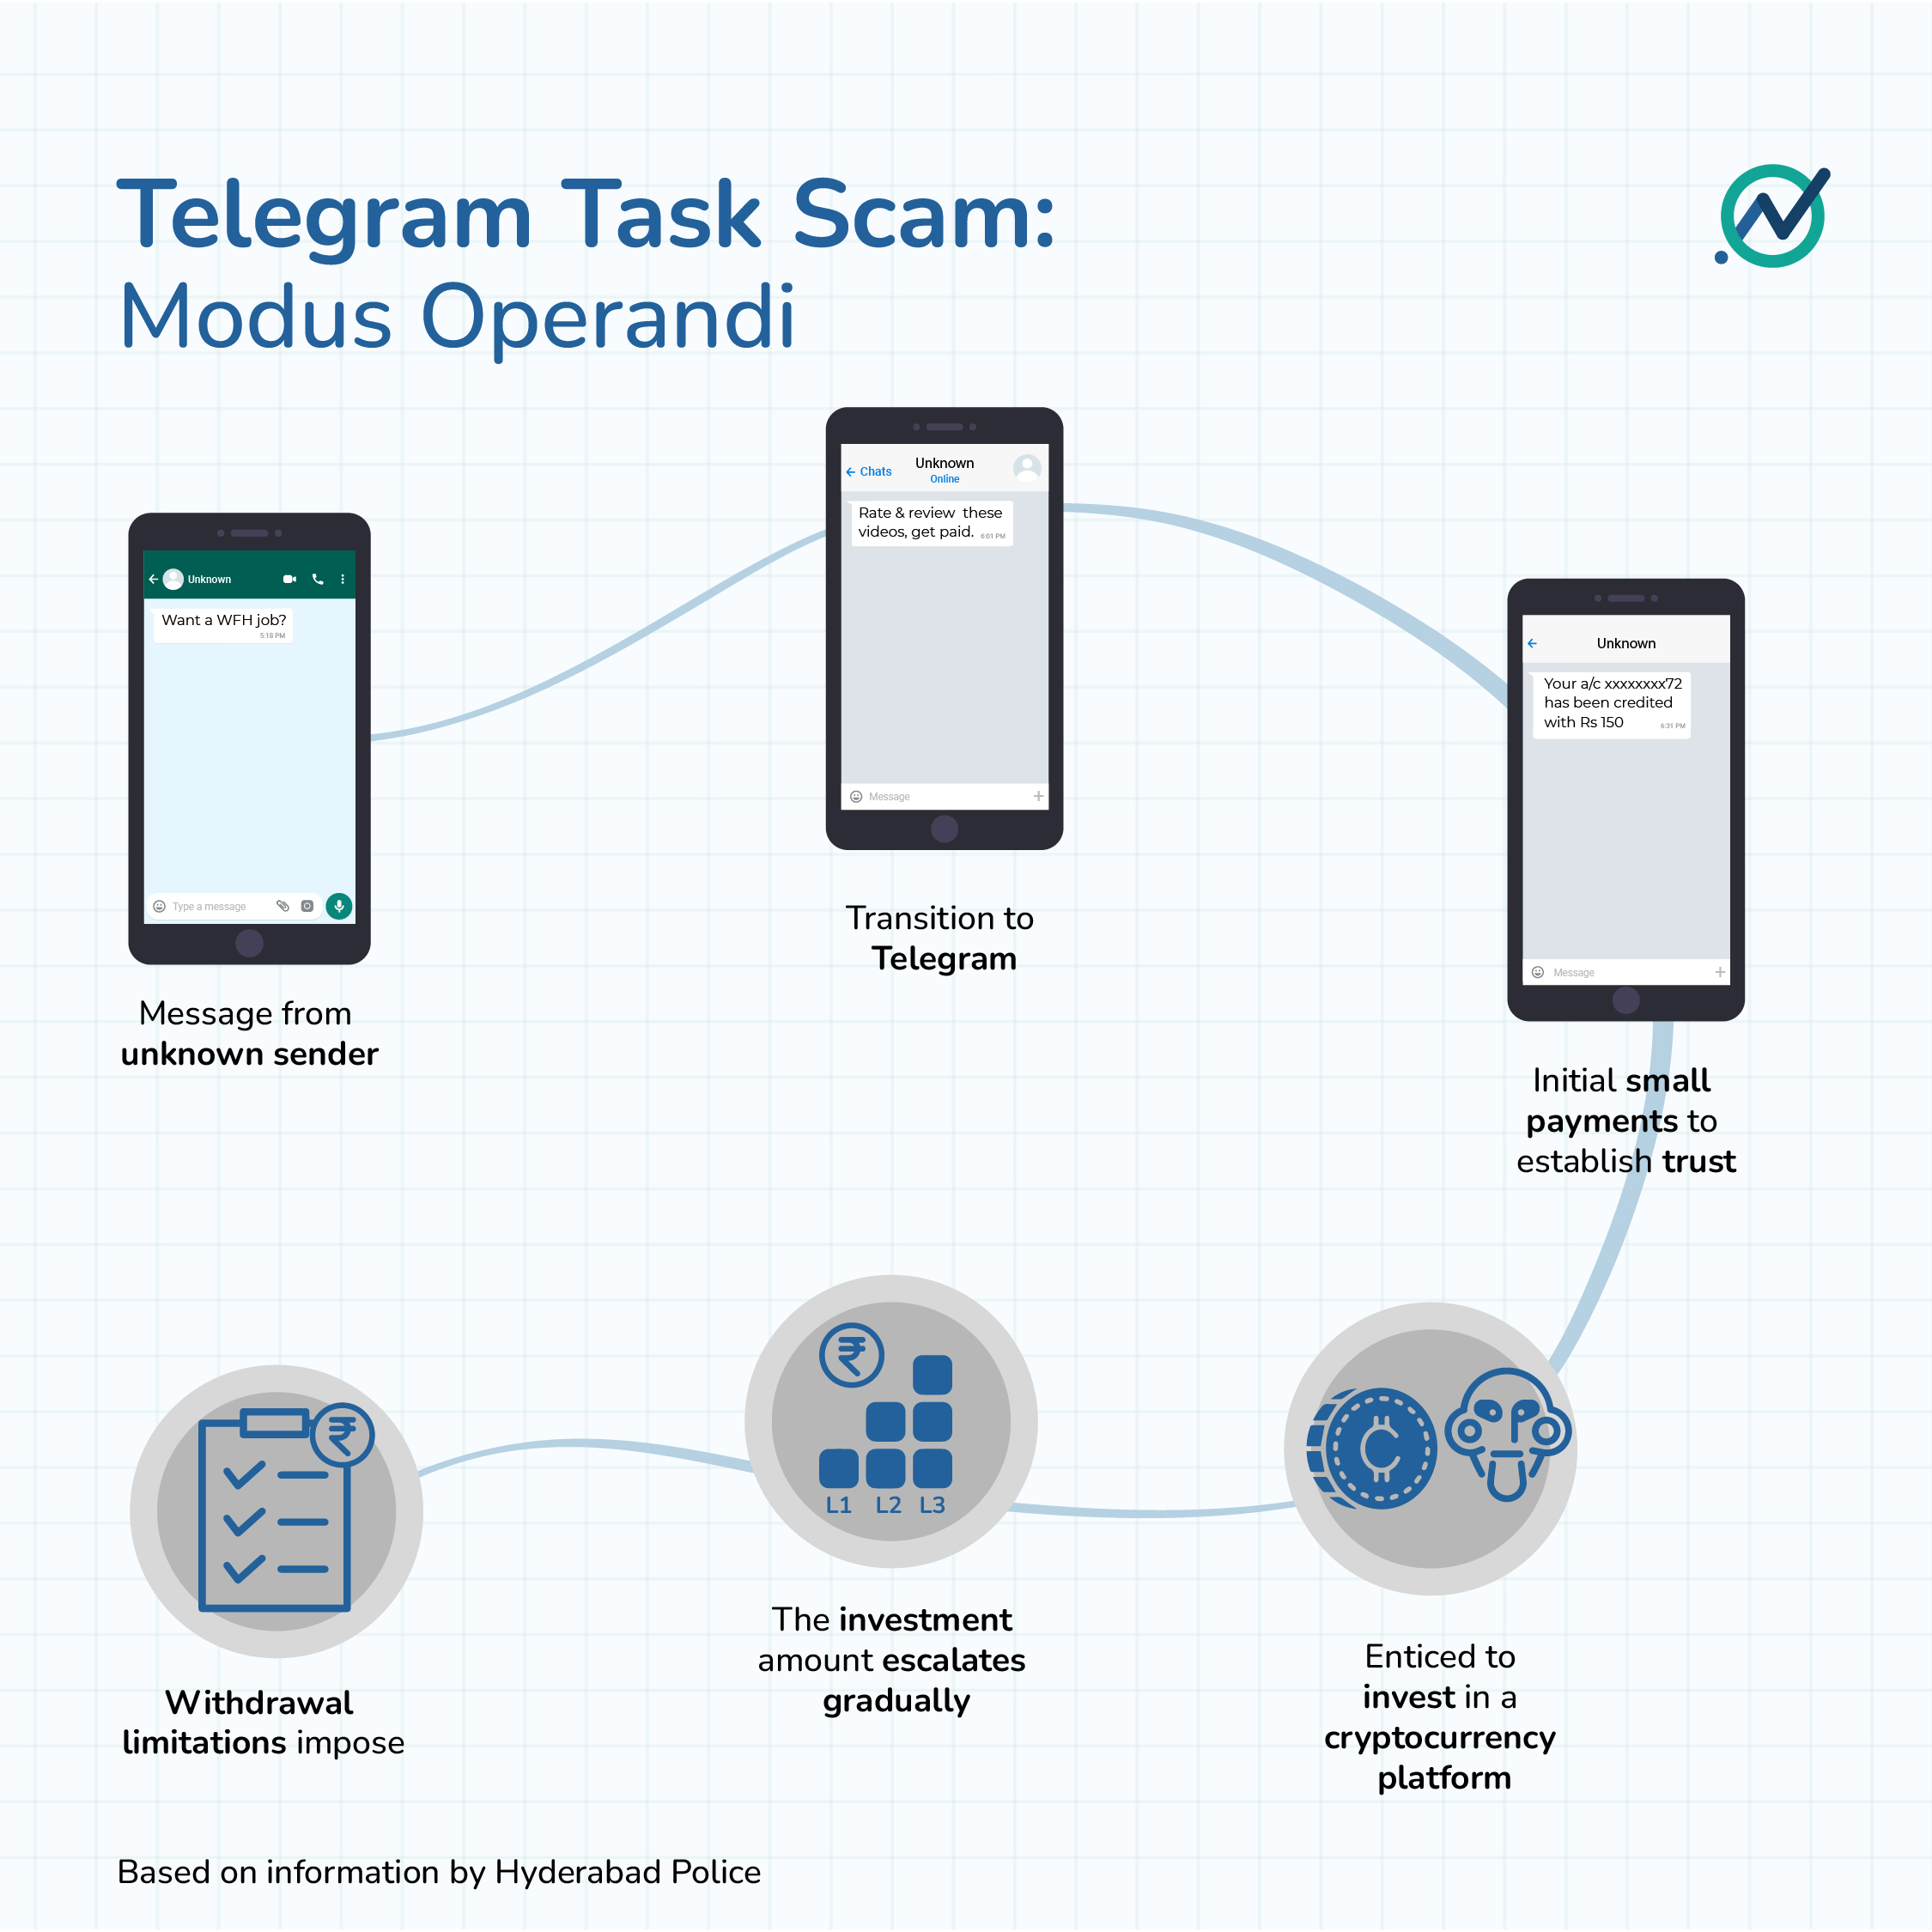 Why can't we take a screenshot while using Telegram? How does Telegram  block it? - Quora